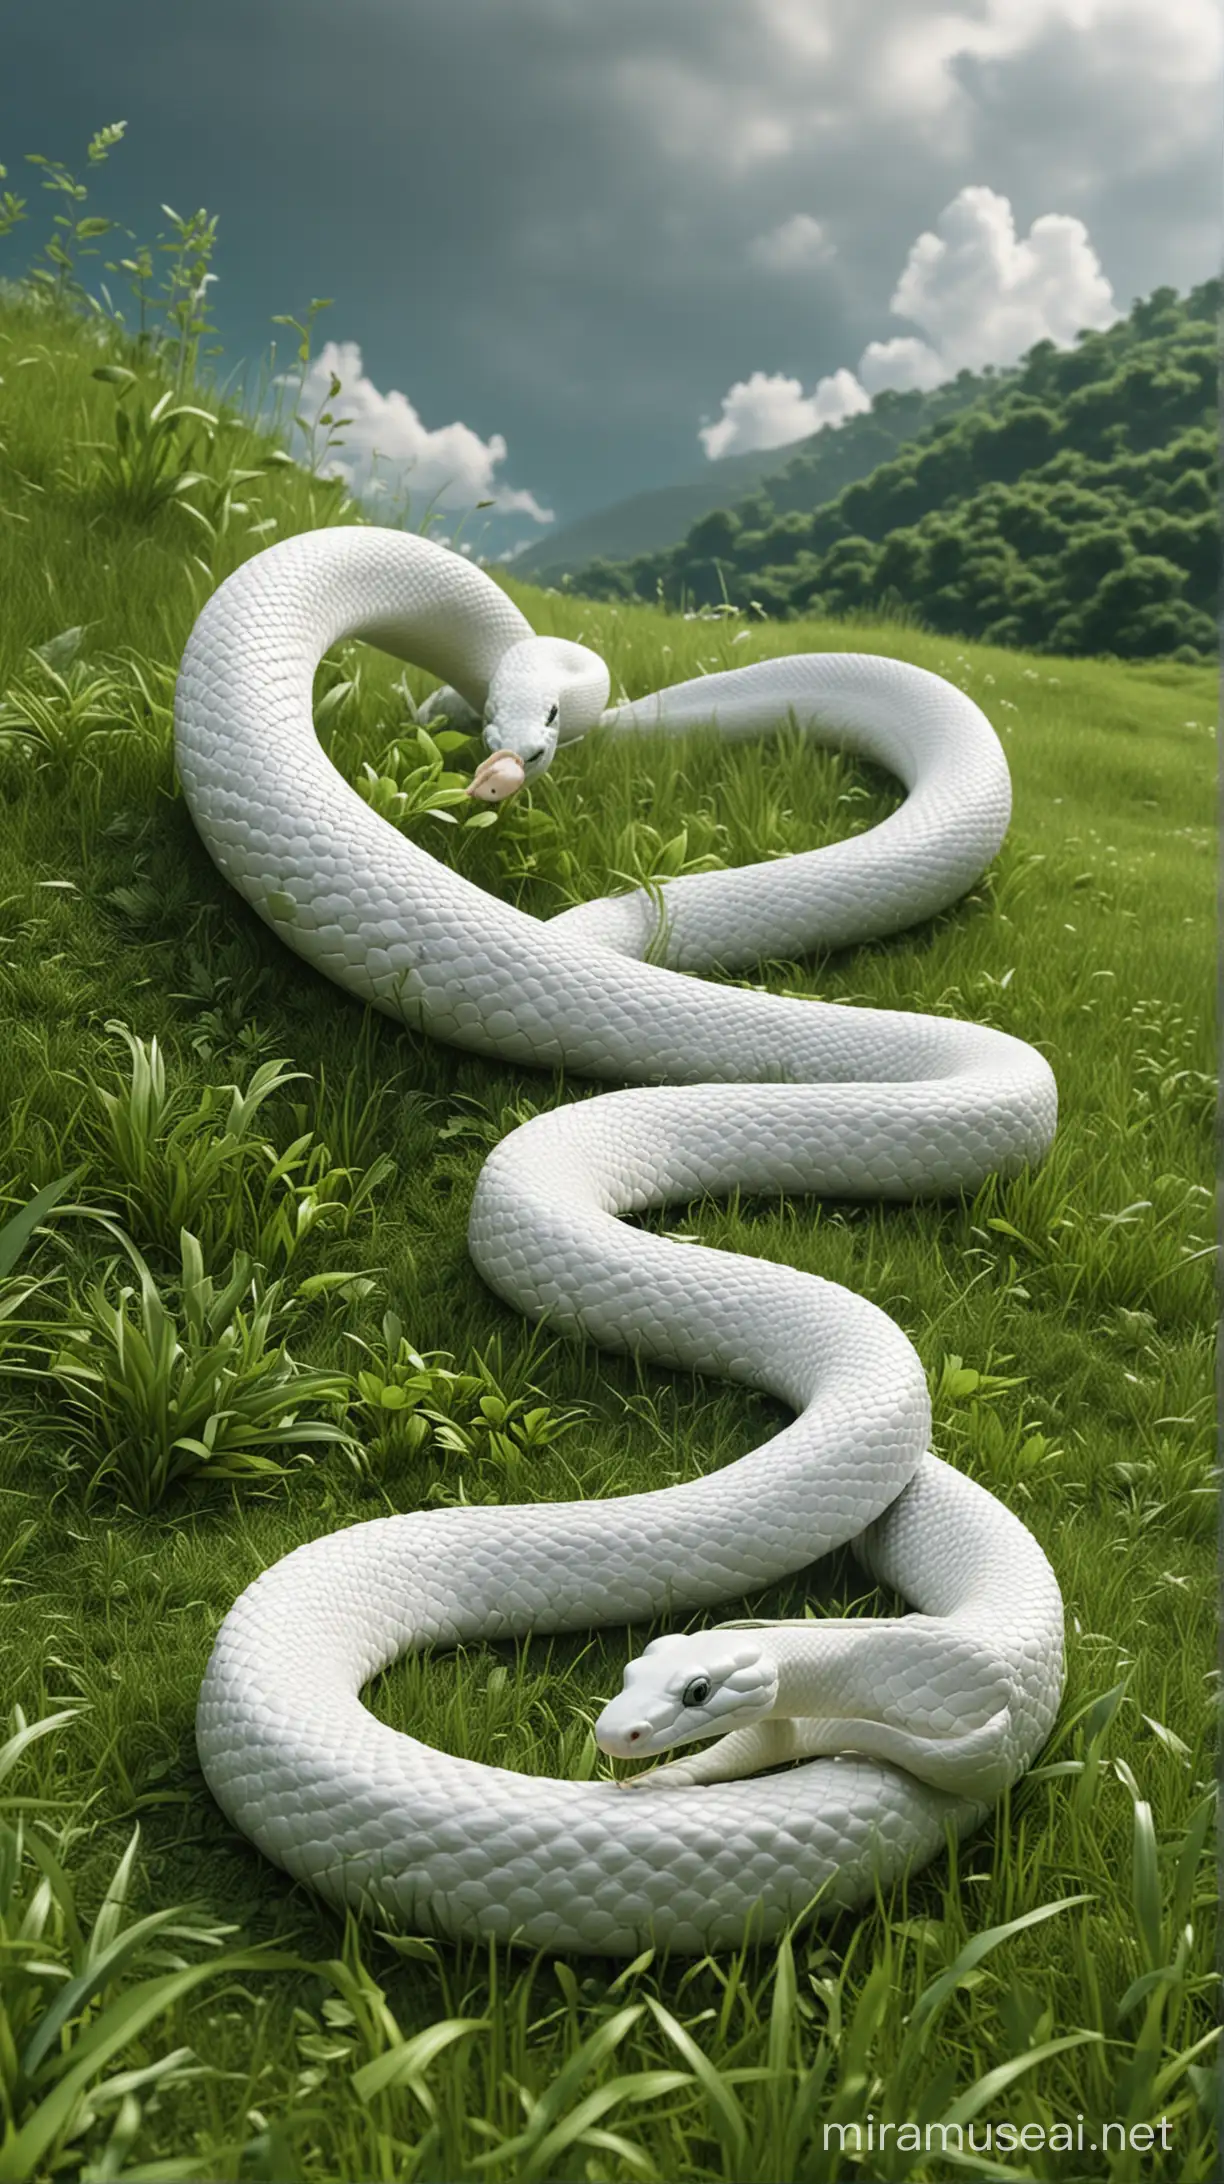 Majestic Hyper Realistic White Snake Coiled on Verdant Hilltop